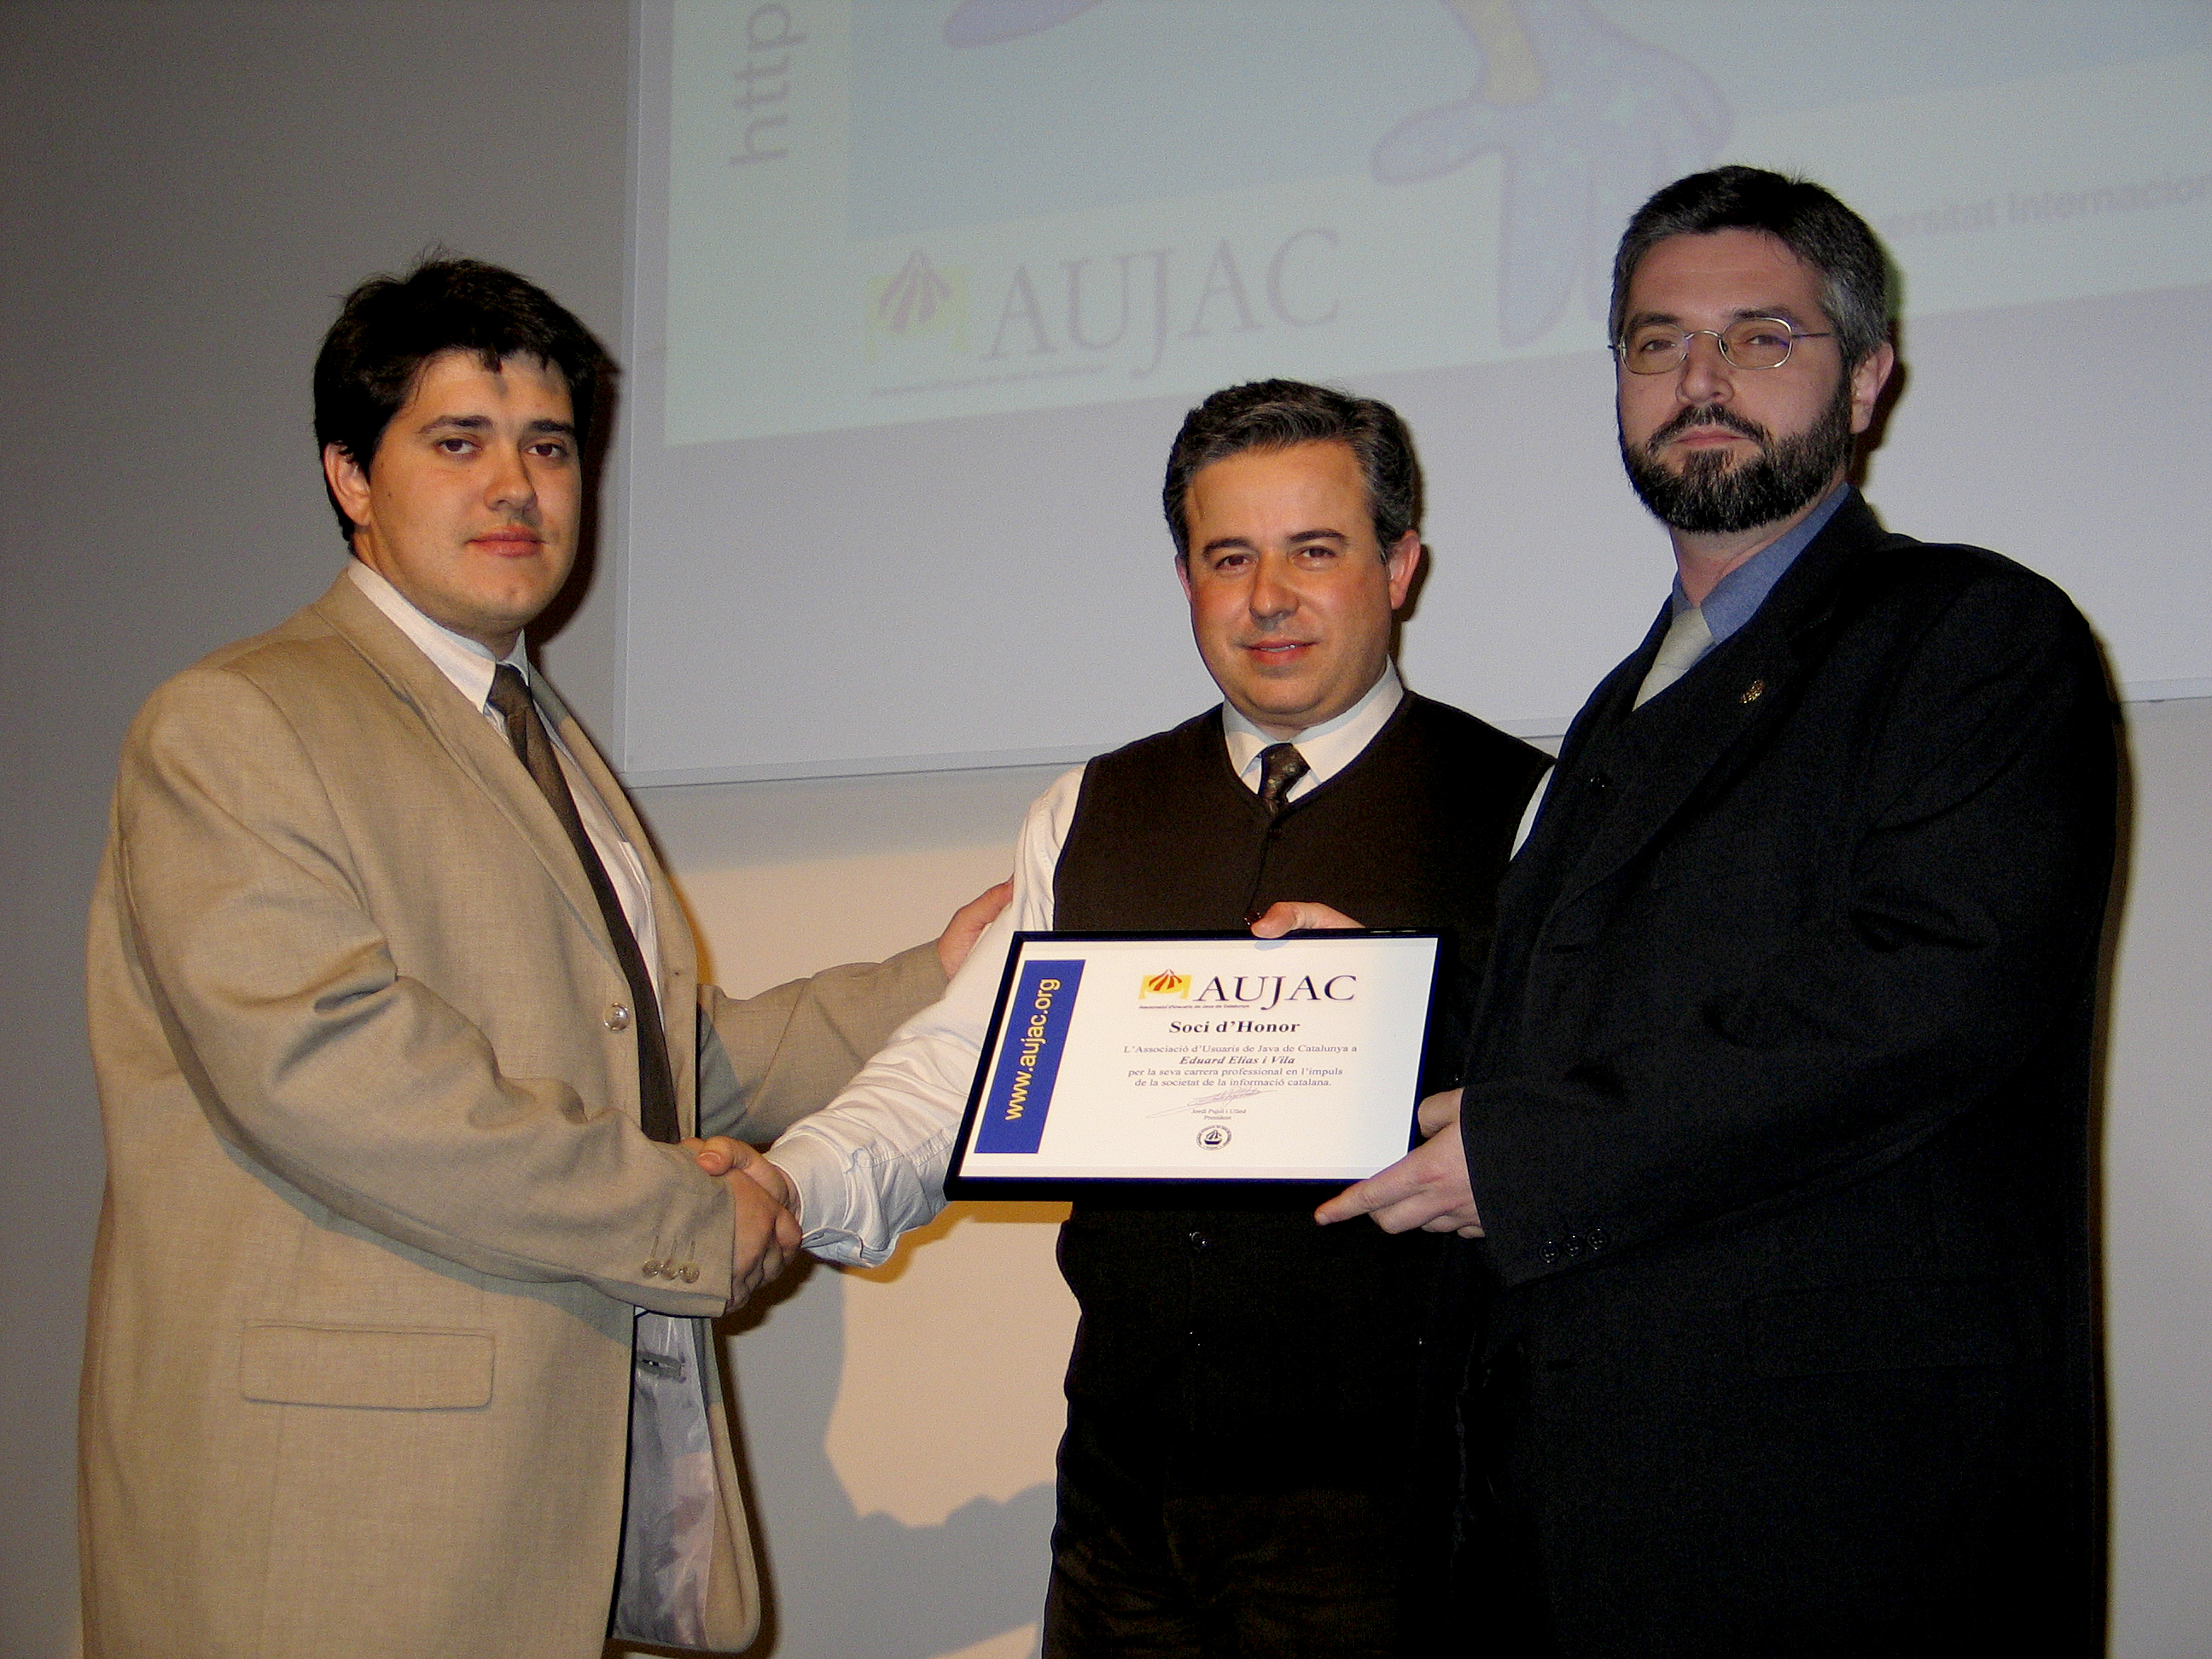 Mr. Eduard Elias (right) receiving the Honorary Member 2004